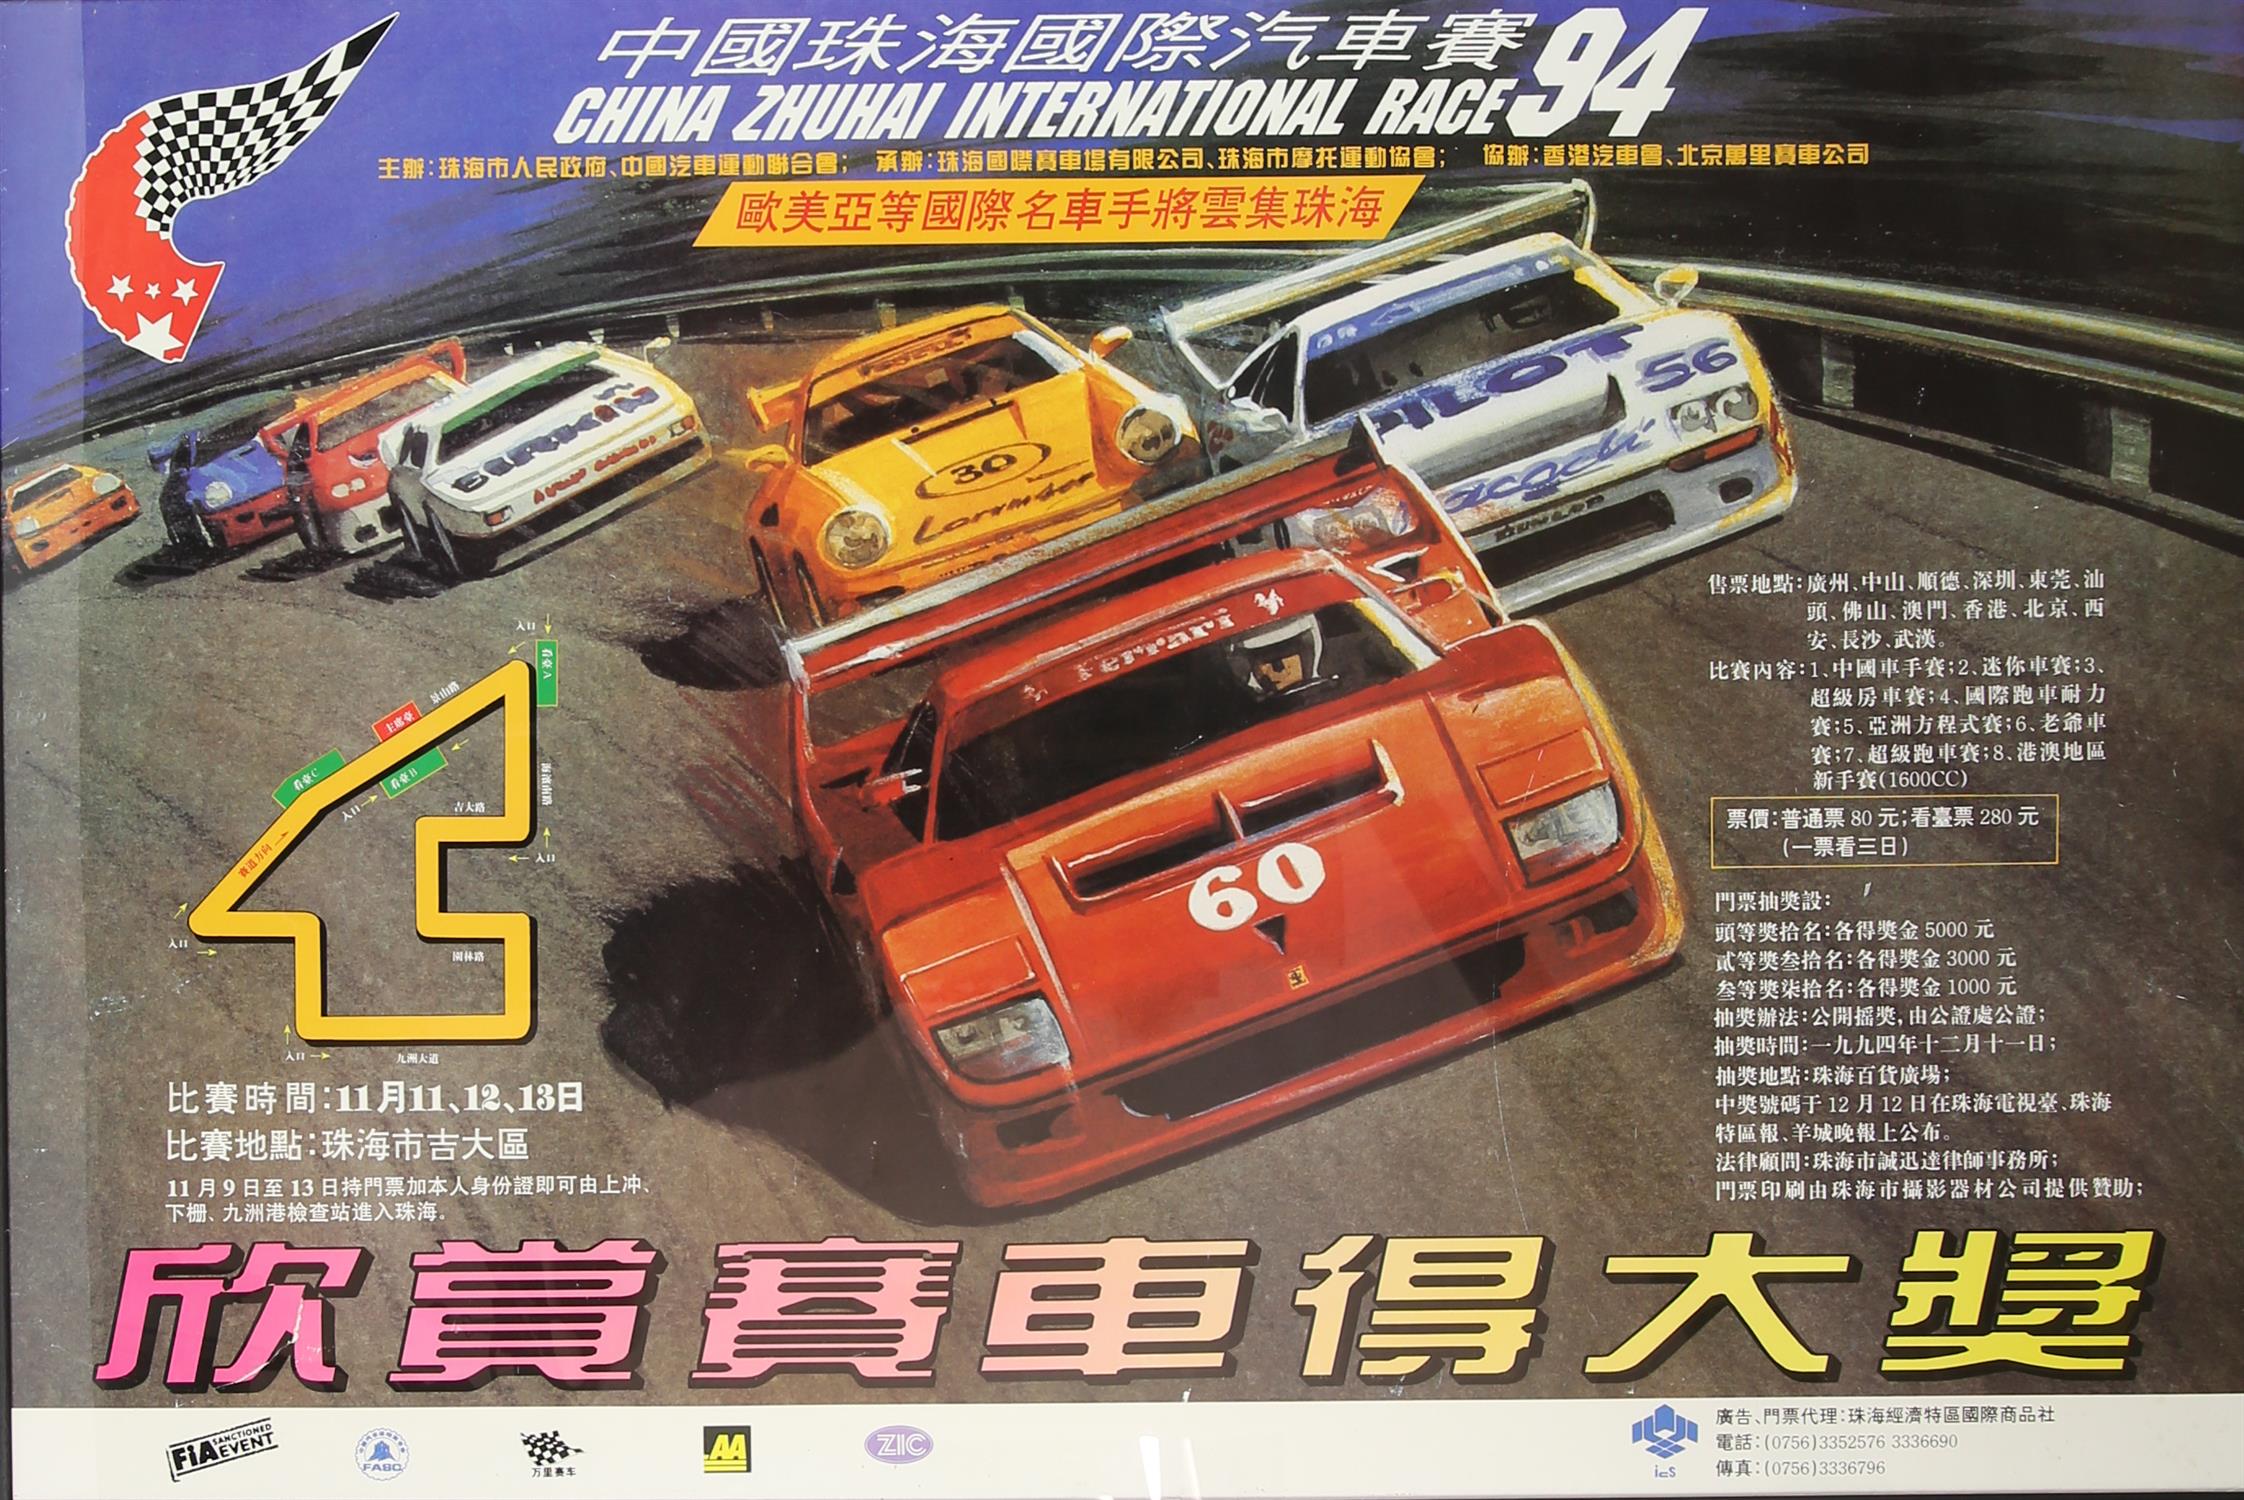 China Zhuhai International Race 94 Poster (framed 36"x25") along with a Photobook. - Image 2 of 2